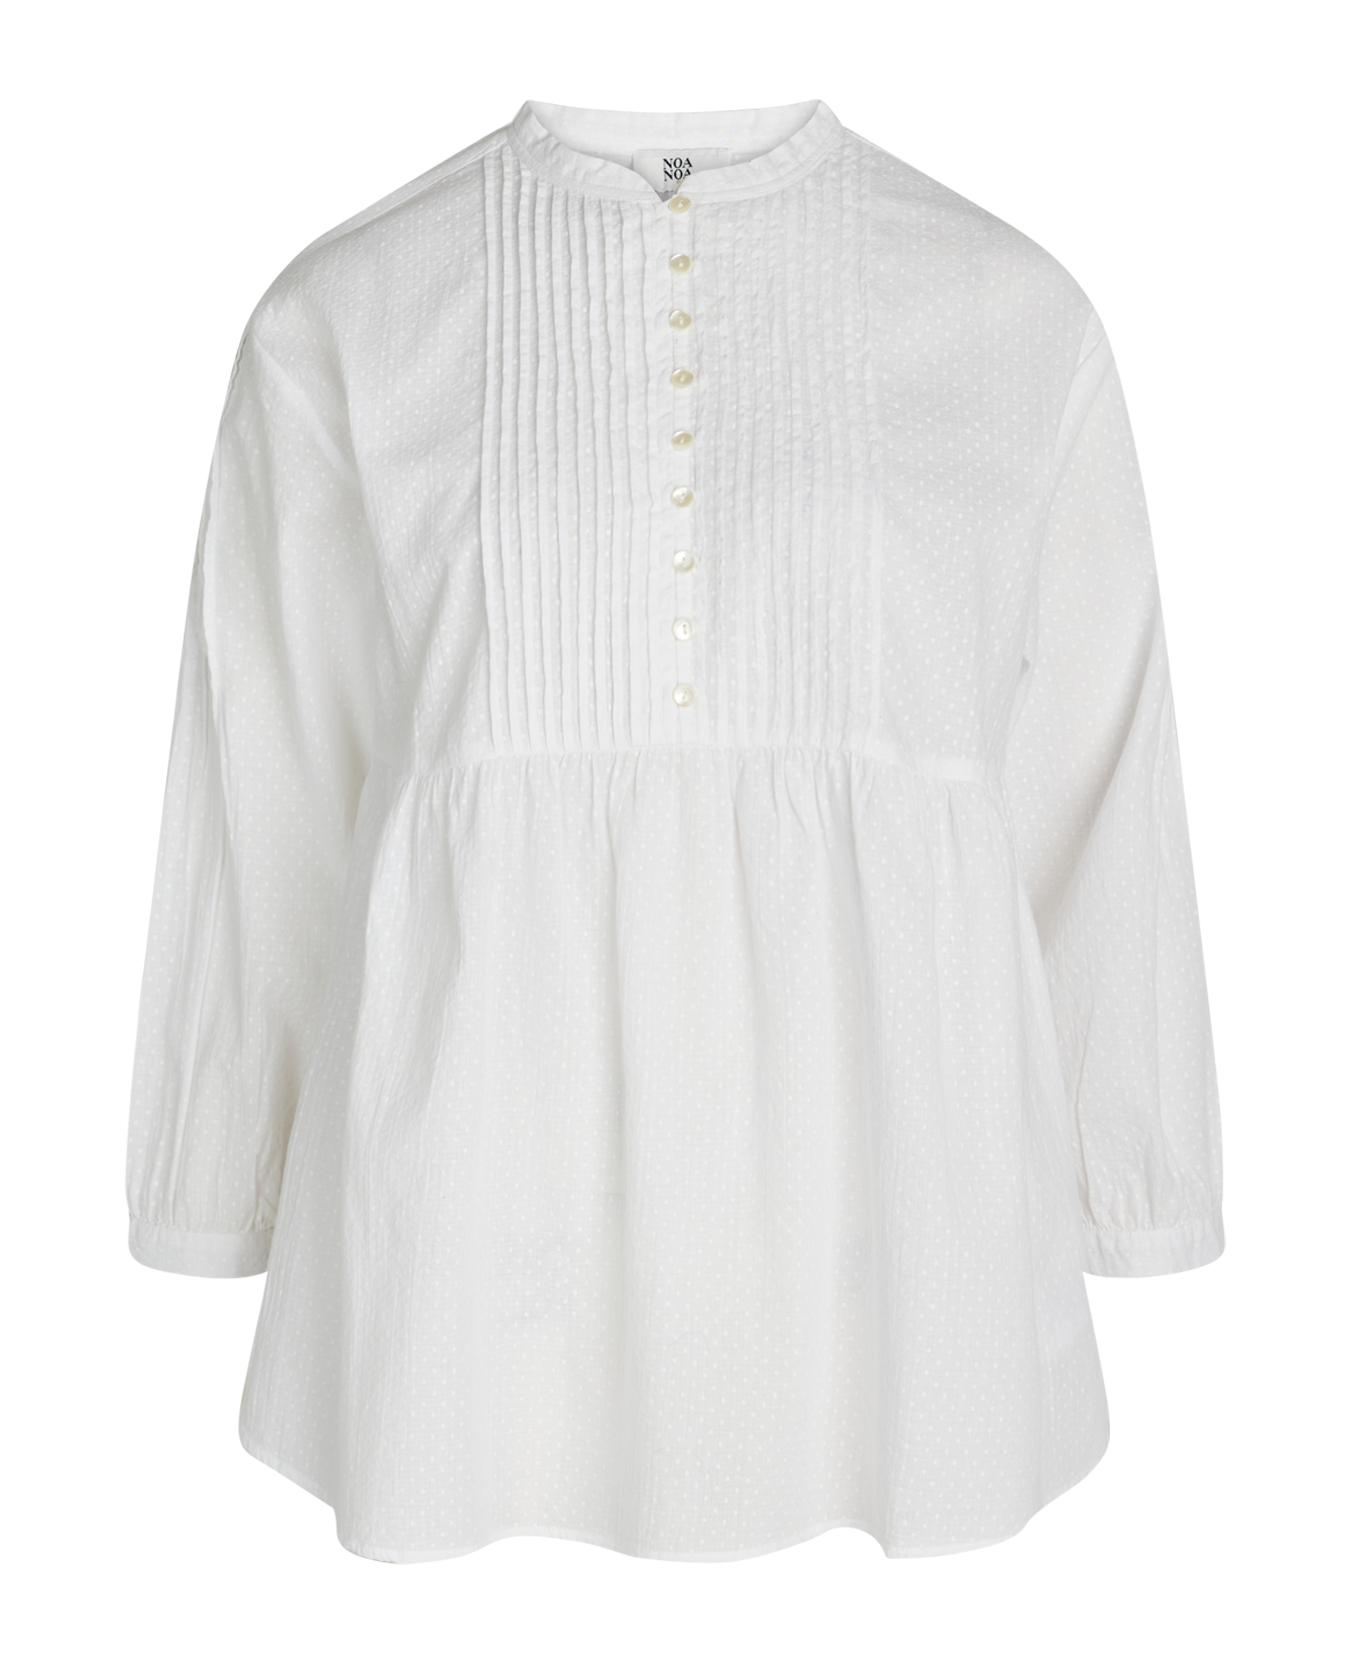 Noa Noa pin tucked tunic style blouse pure white cotton.